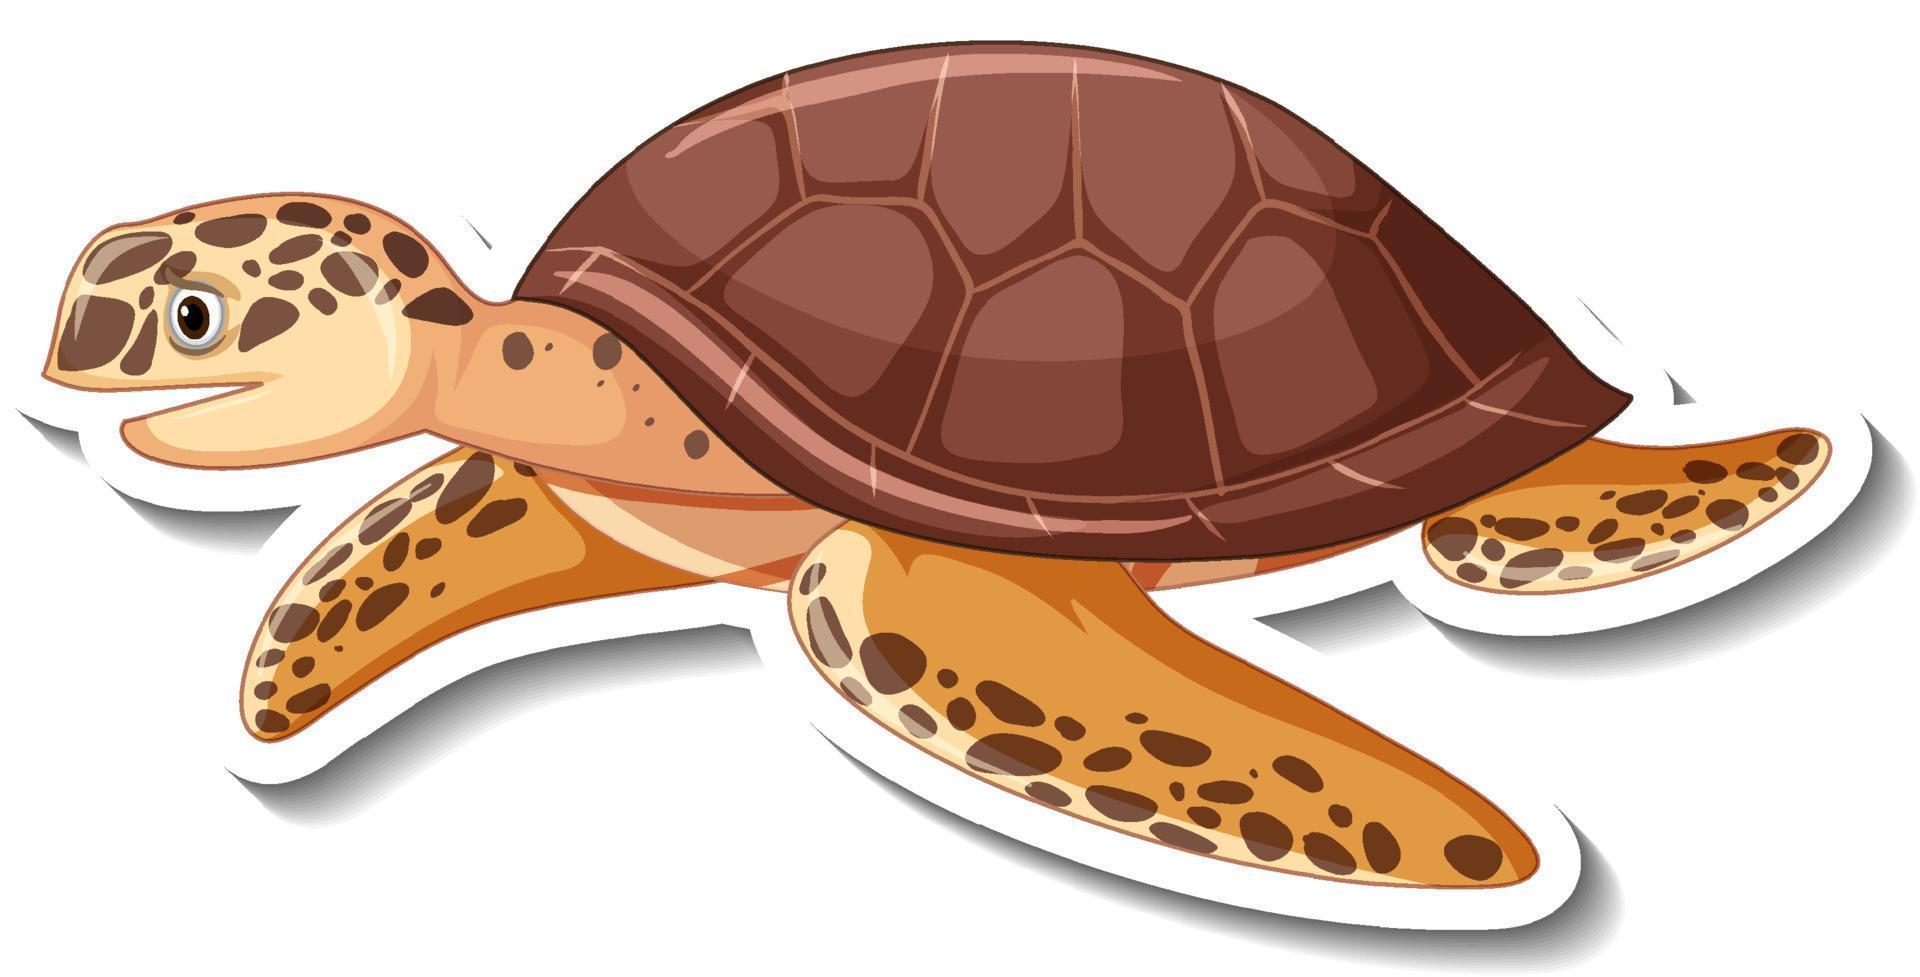 Adesivo de animal marinho com tartaruga vetor